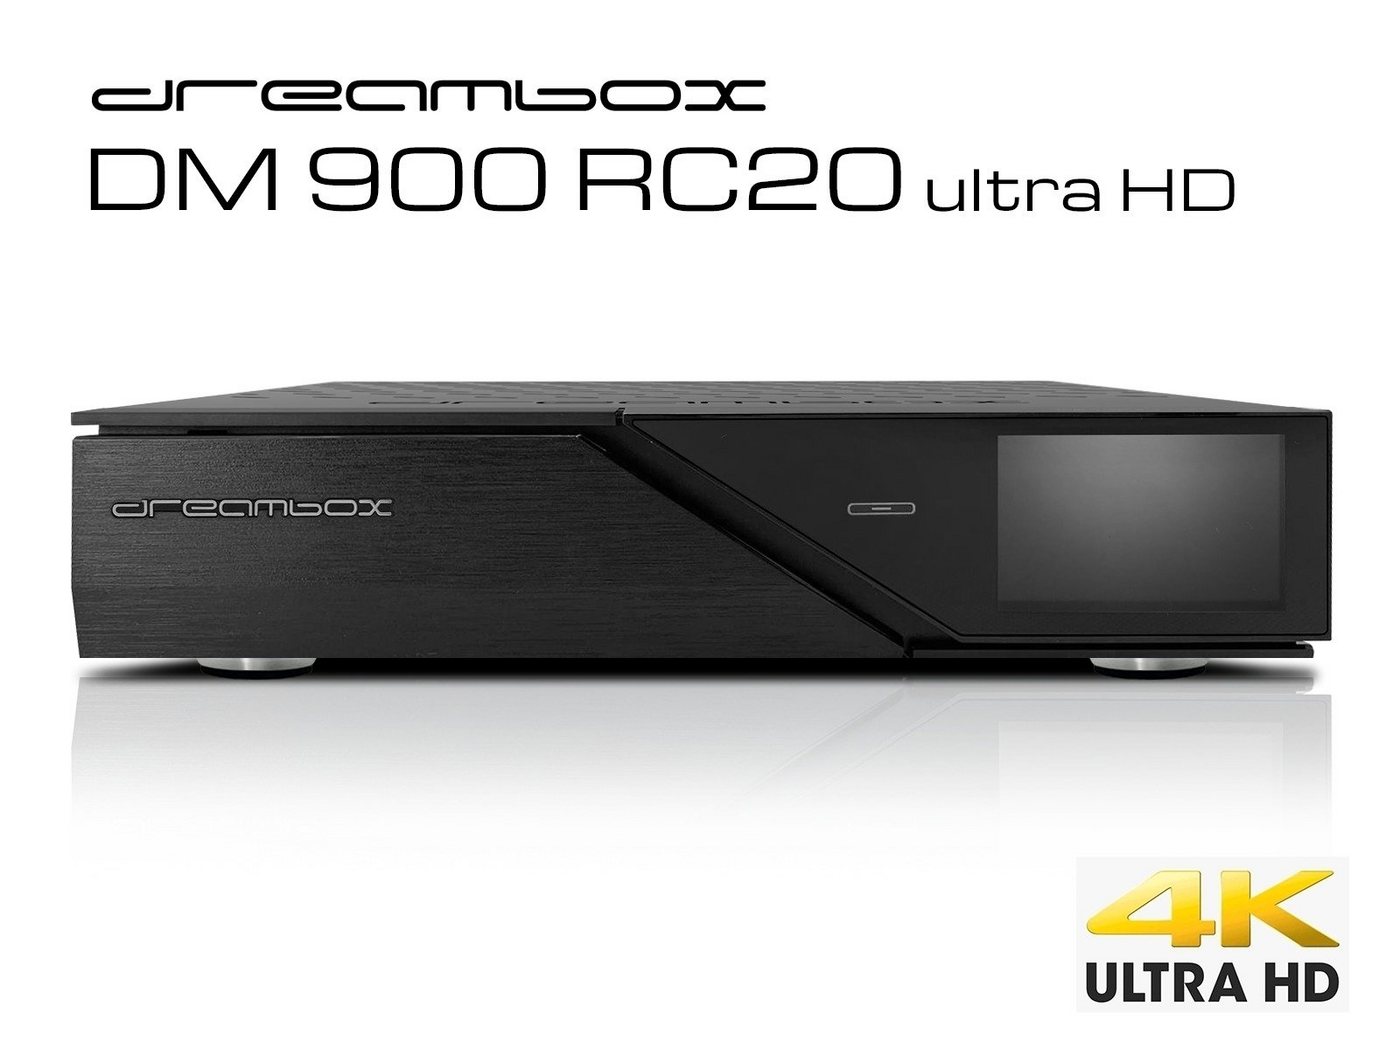 Dreambox Dreambox DM900 RC20 UHD 4K 1x Dual DVB-S2X MS Tuner E2 Linux PVR ready Satellitenreceiver von Dreambox